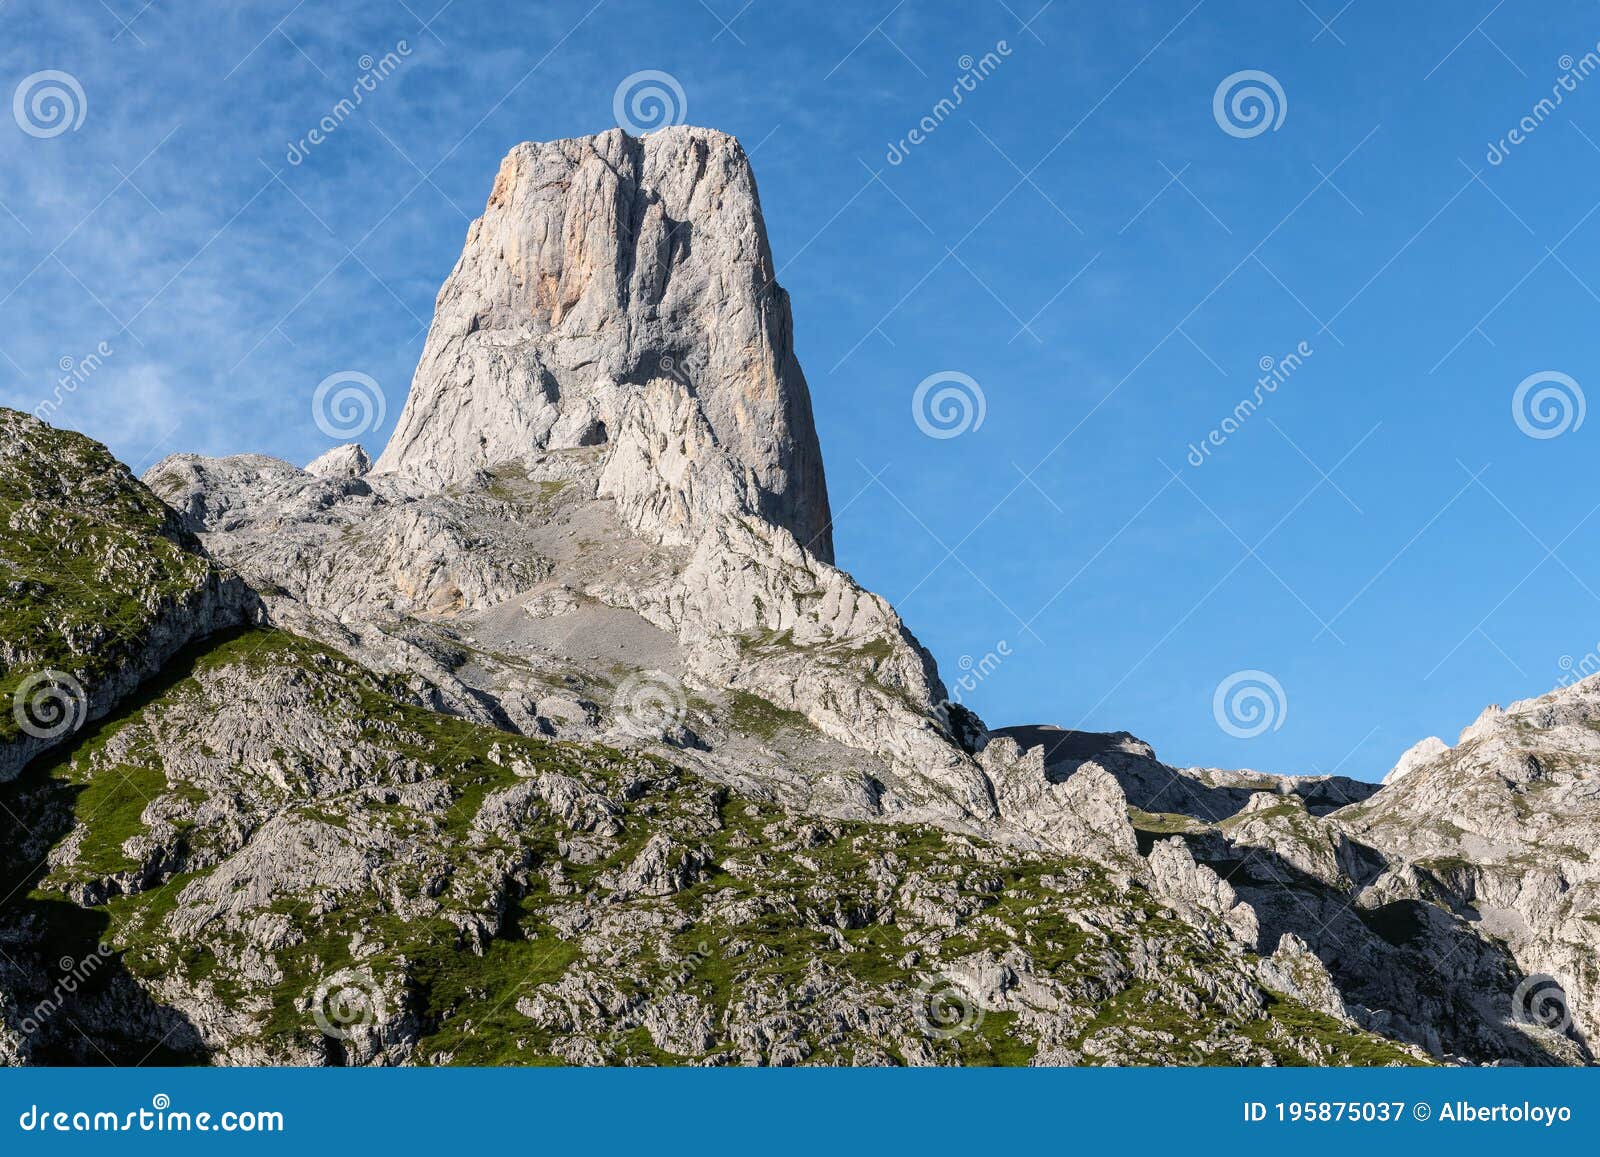 naranjo de bulnes in picos de europa national park, asturias in spain